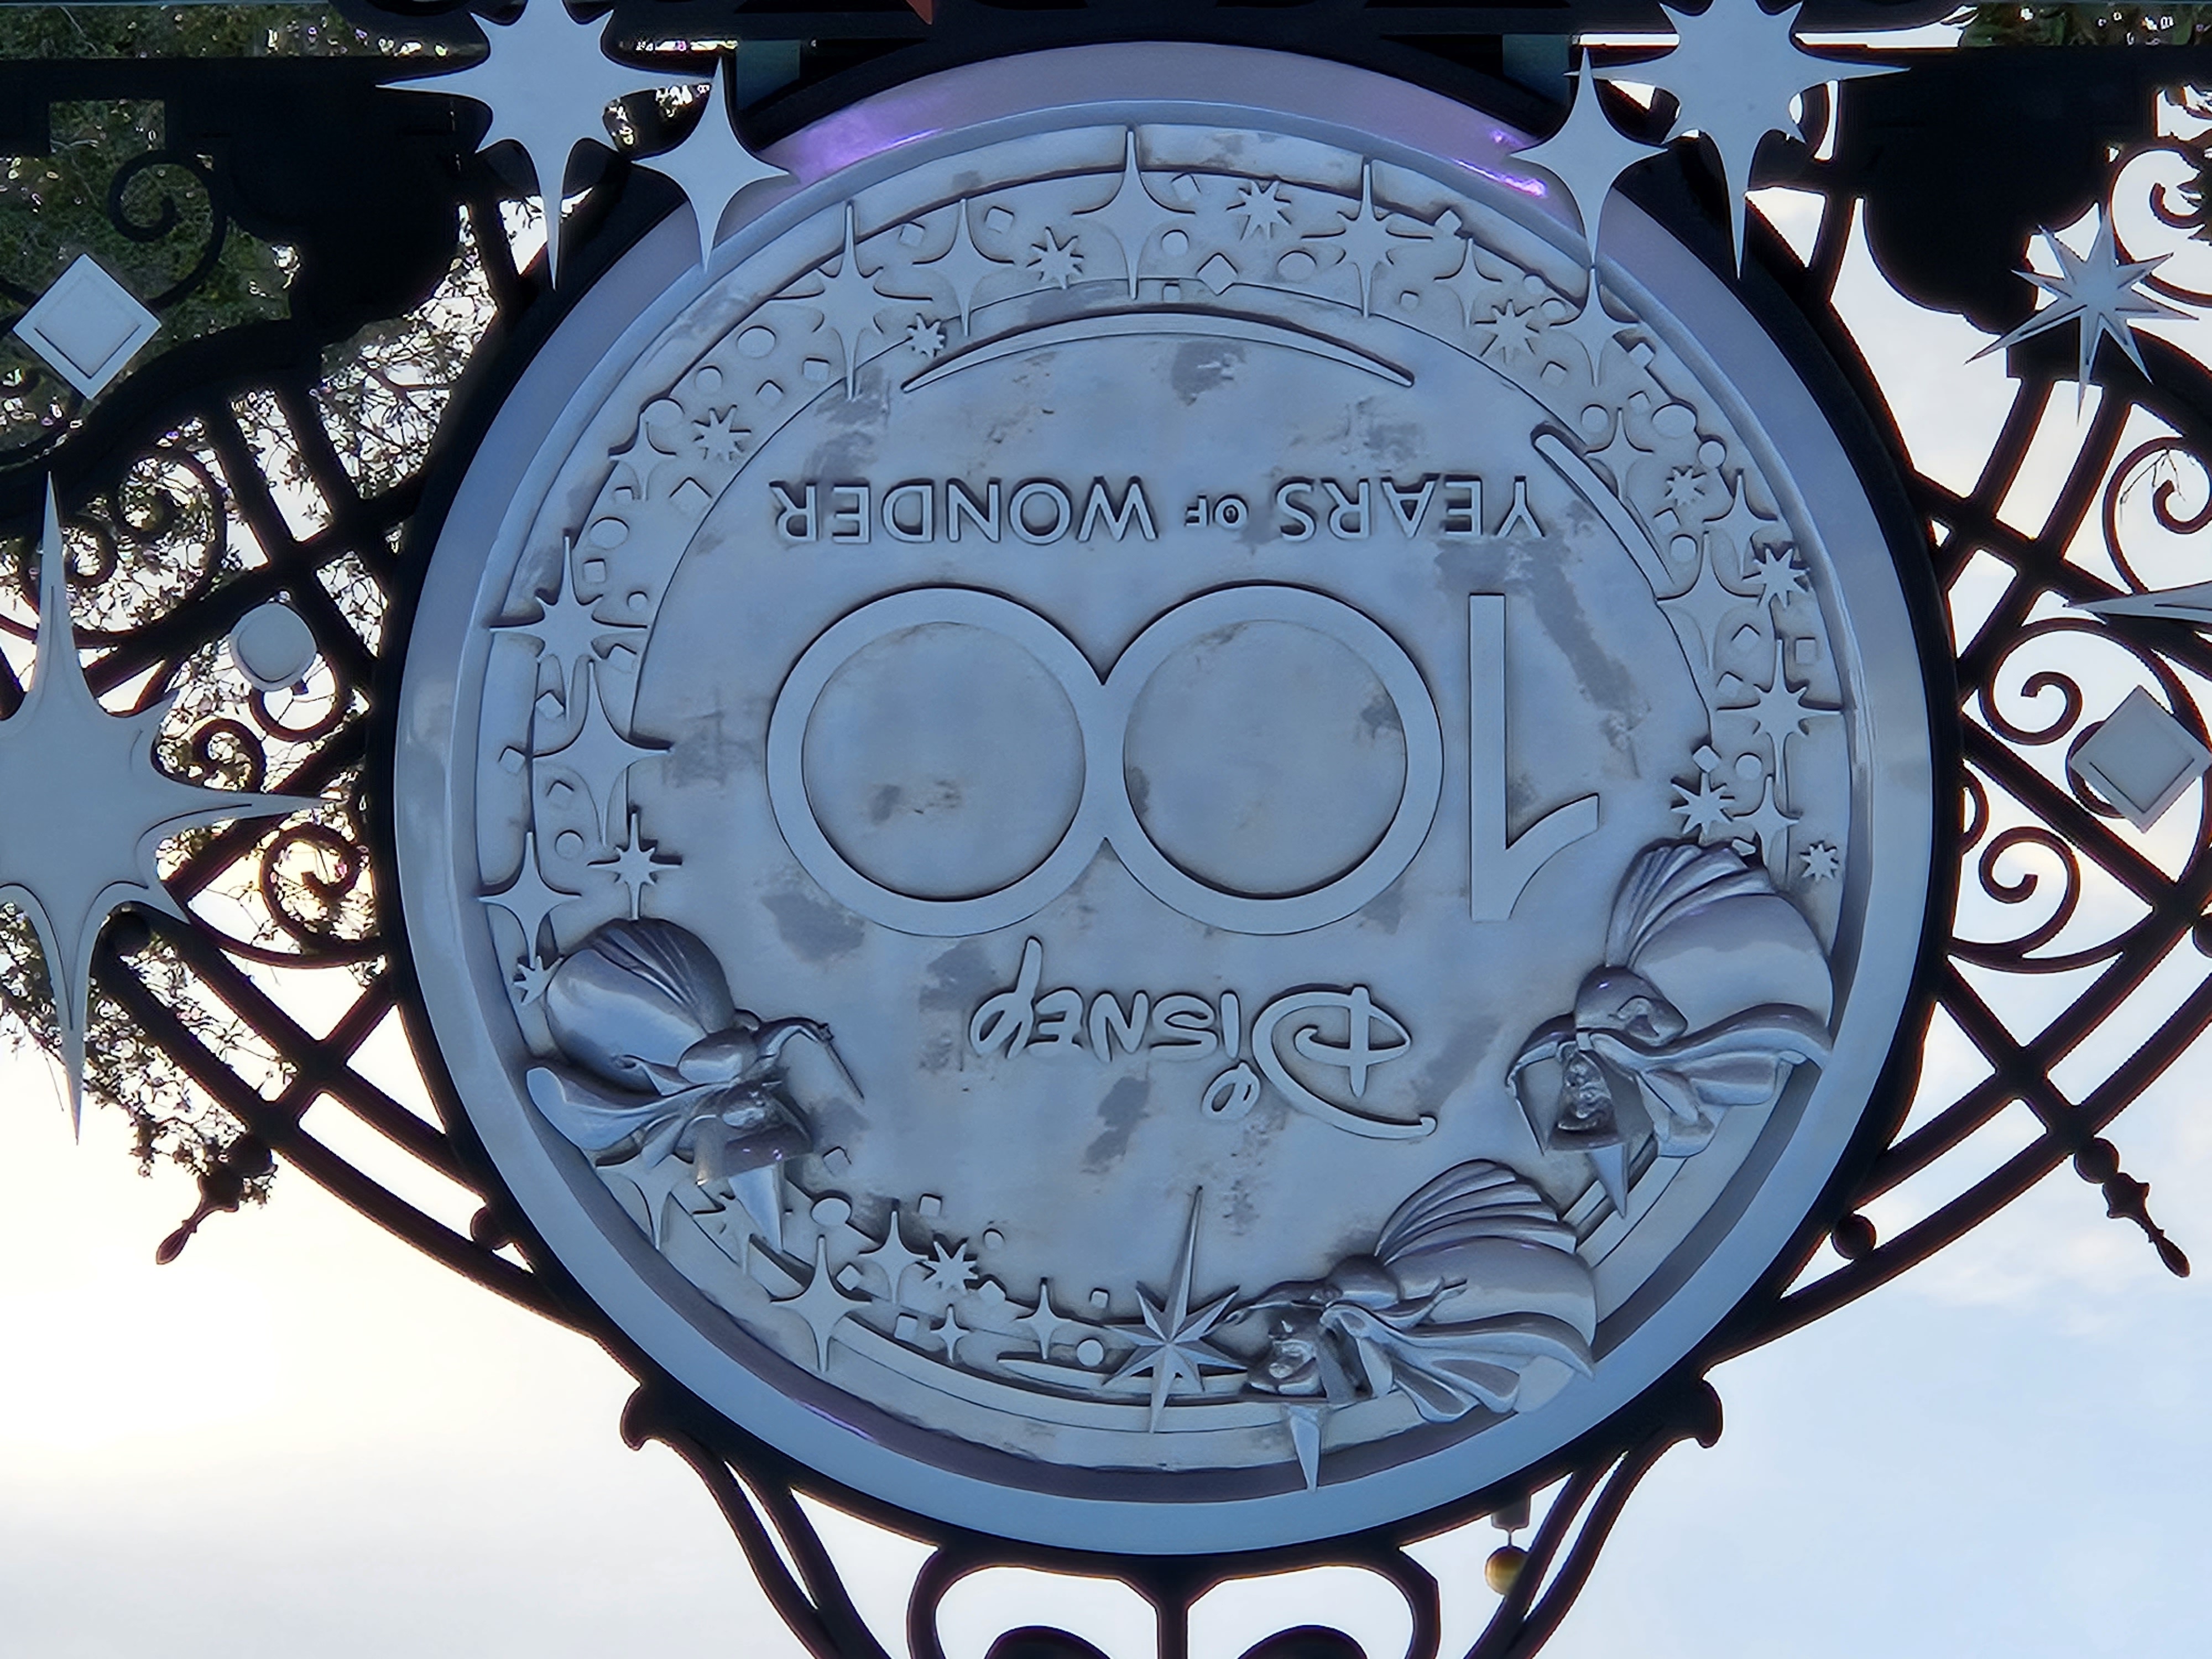 Disney 100 Years of Wonder sign above Disney California Adventure Park at 10X